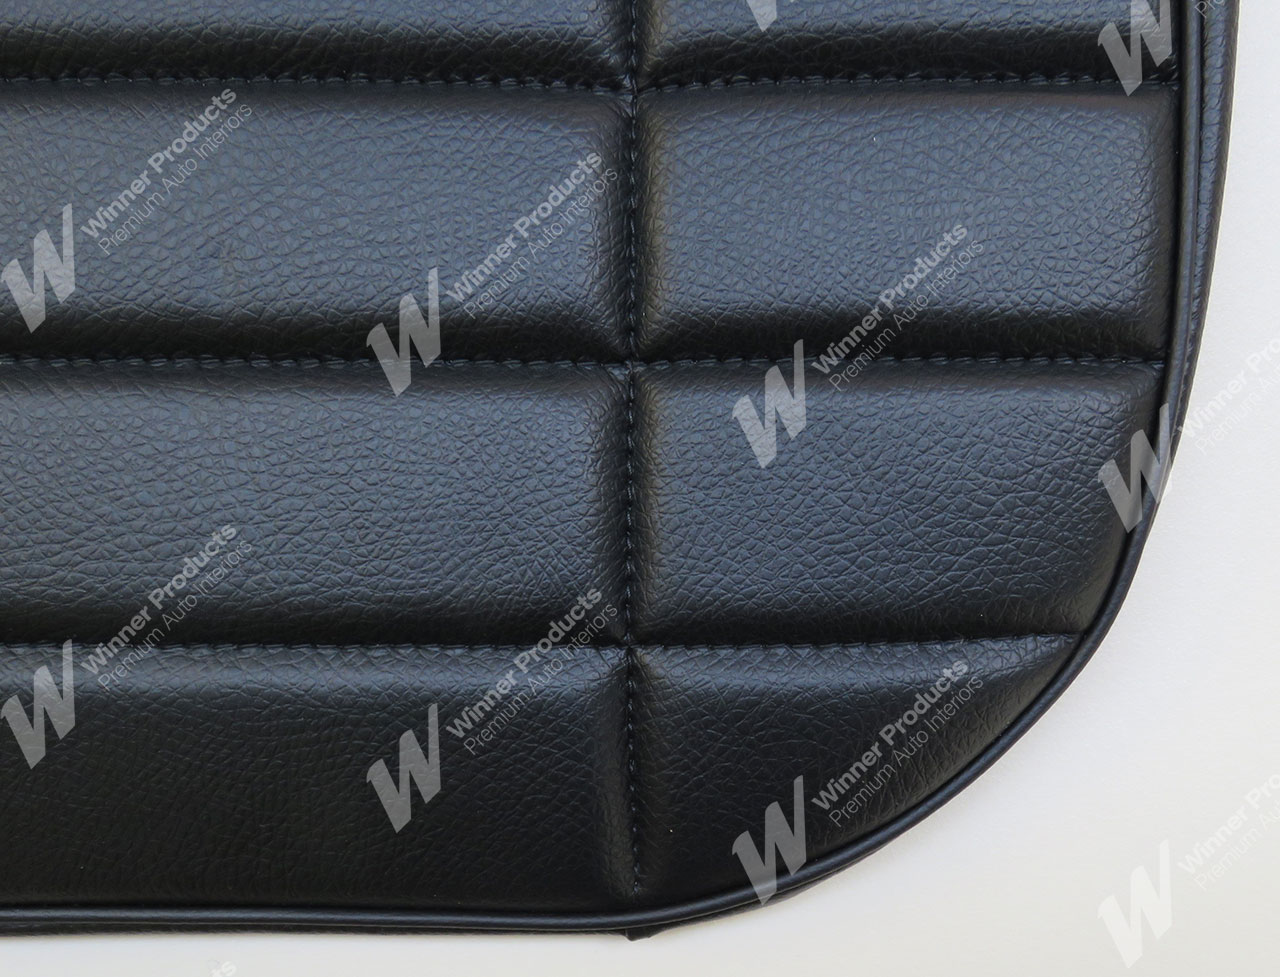 Holden Torana LC Torana XU1 Coupe 40X Black Seat Covers (Image 4 of 4)